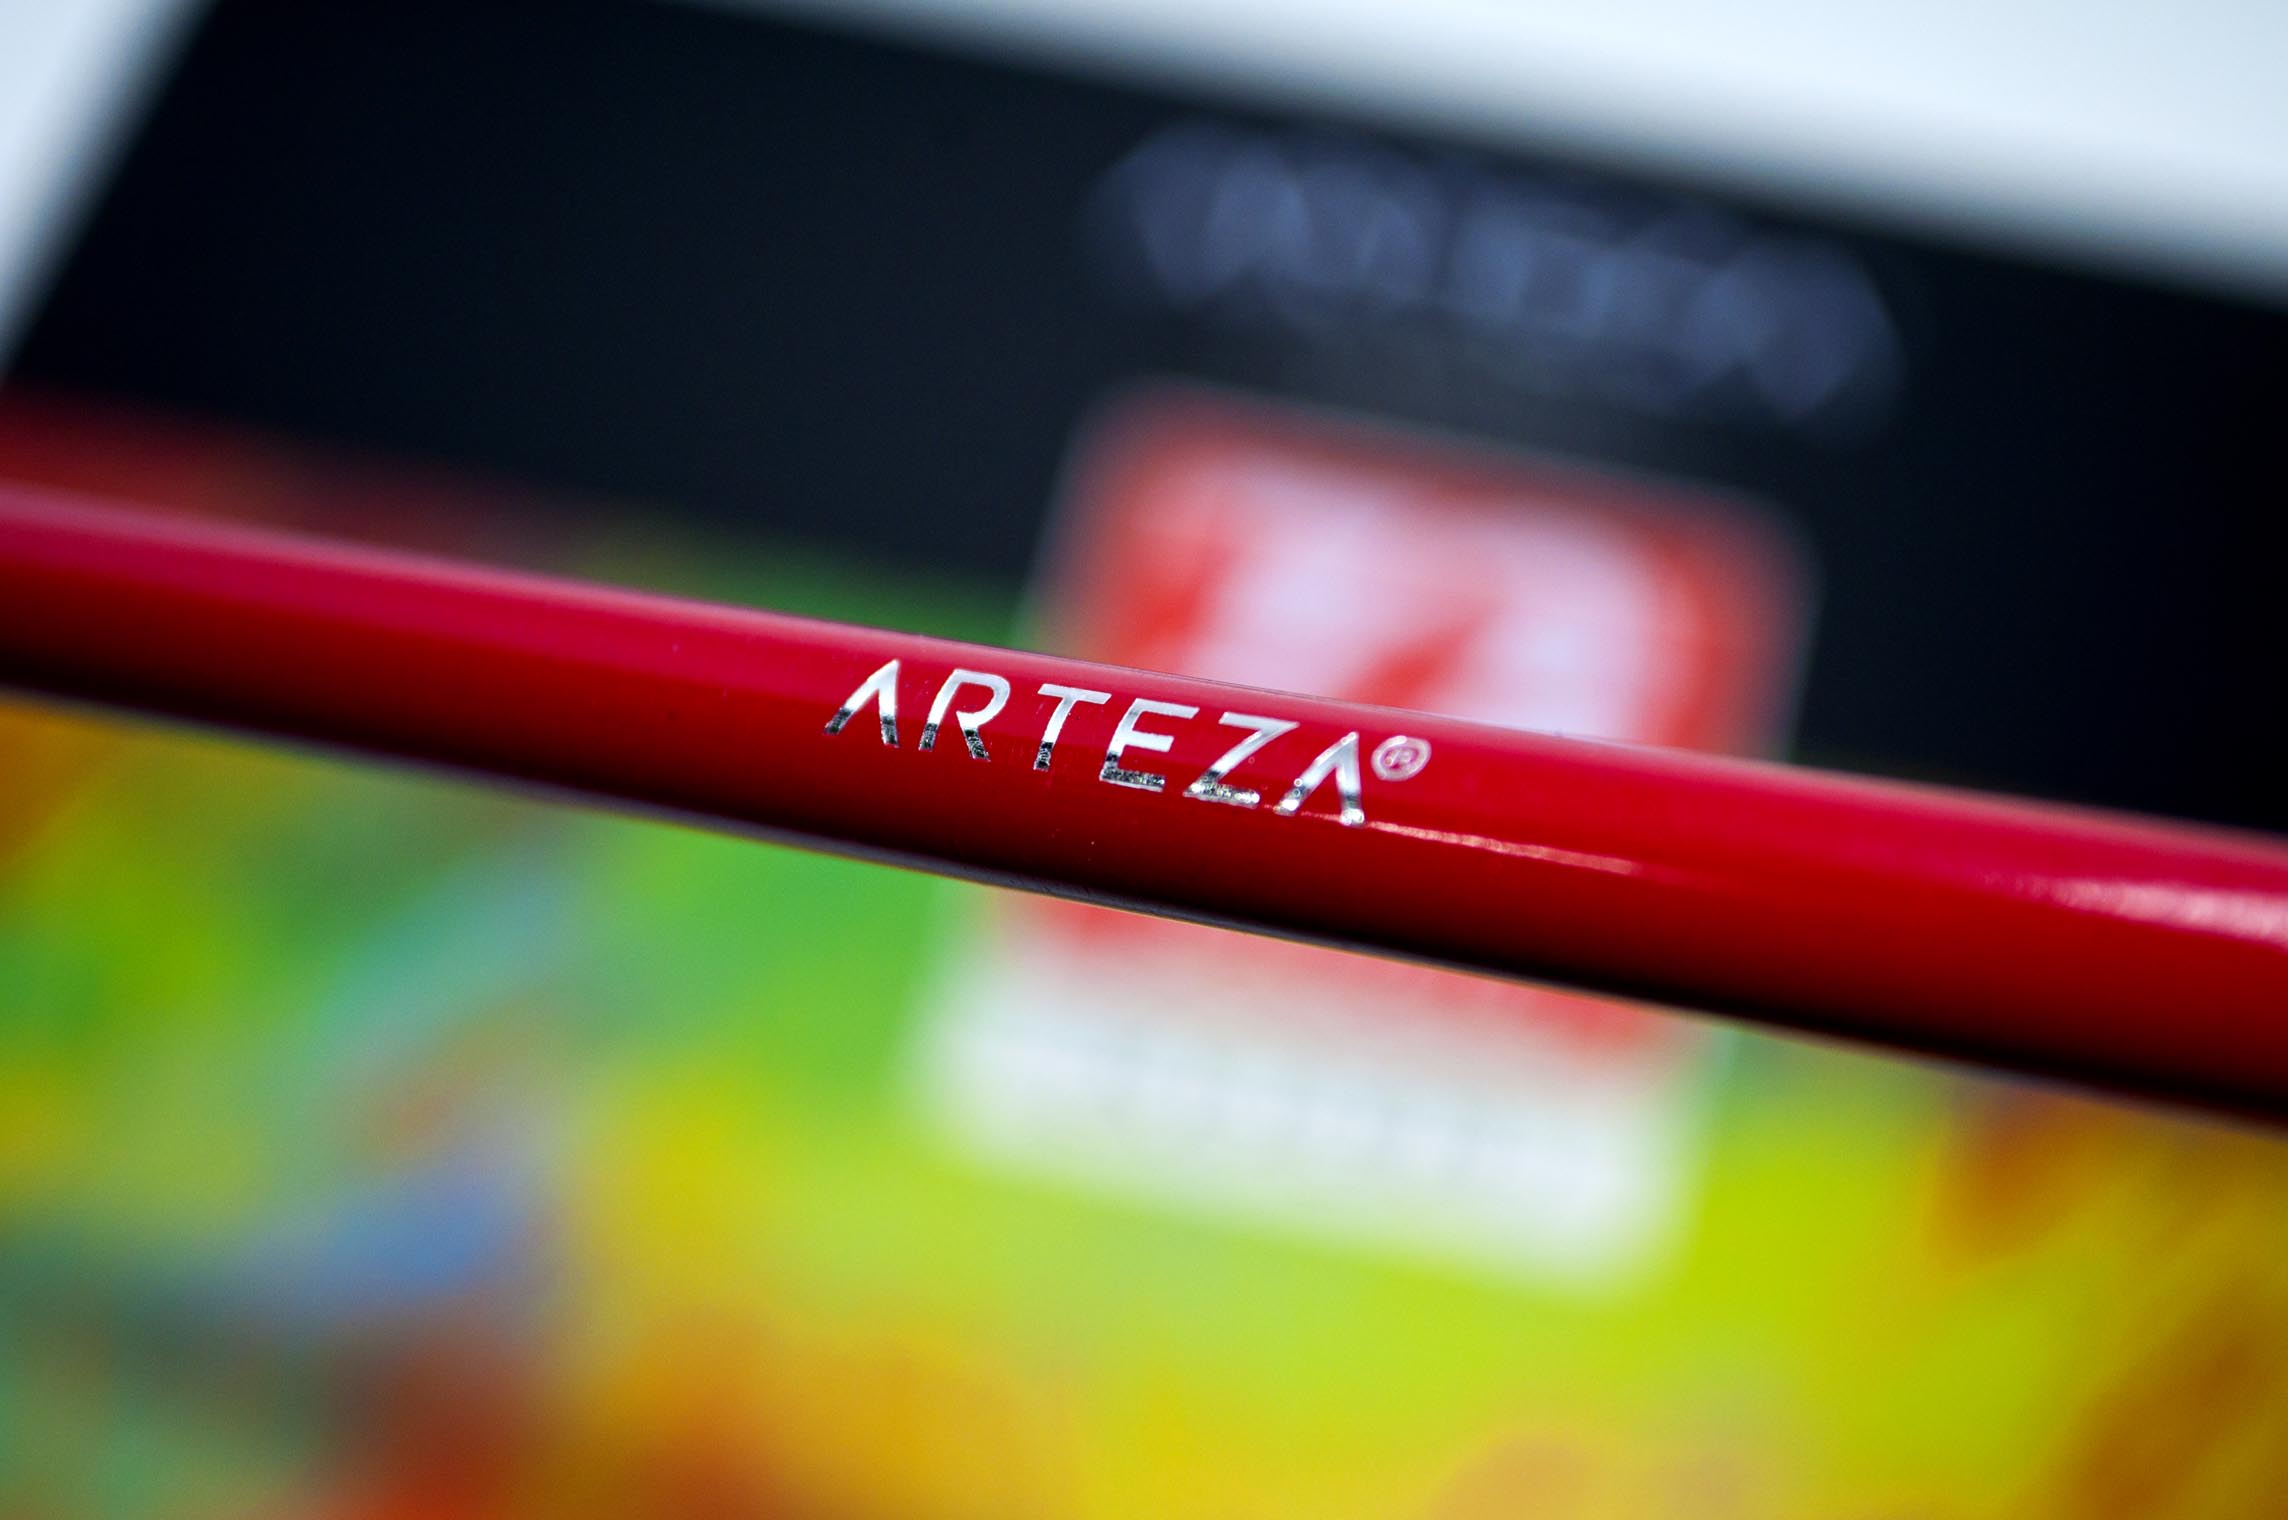 Arteza Expert Colored Pencils The Art Gear Guide Create colored pencil portrait artwork like this colored pencil drawing video. arteza expert colored pencils the